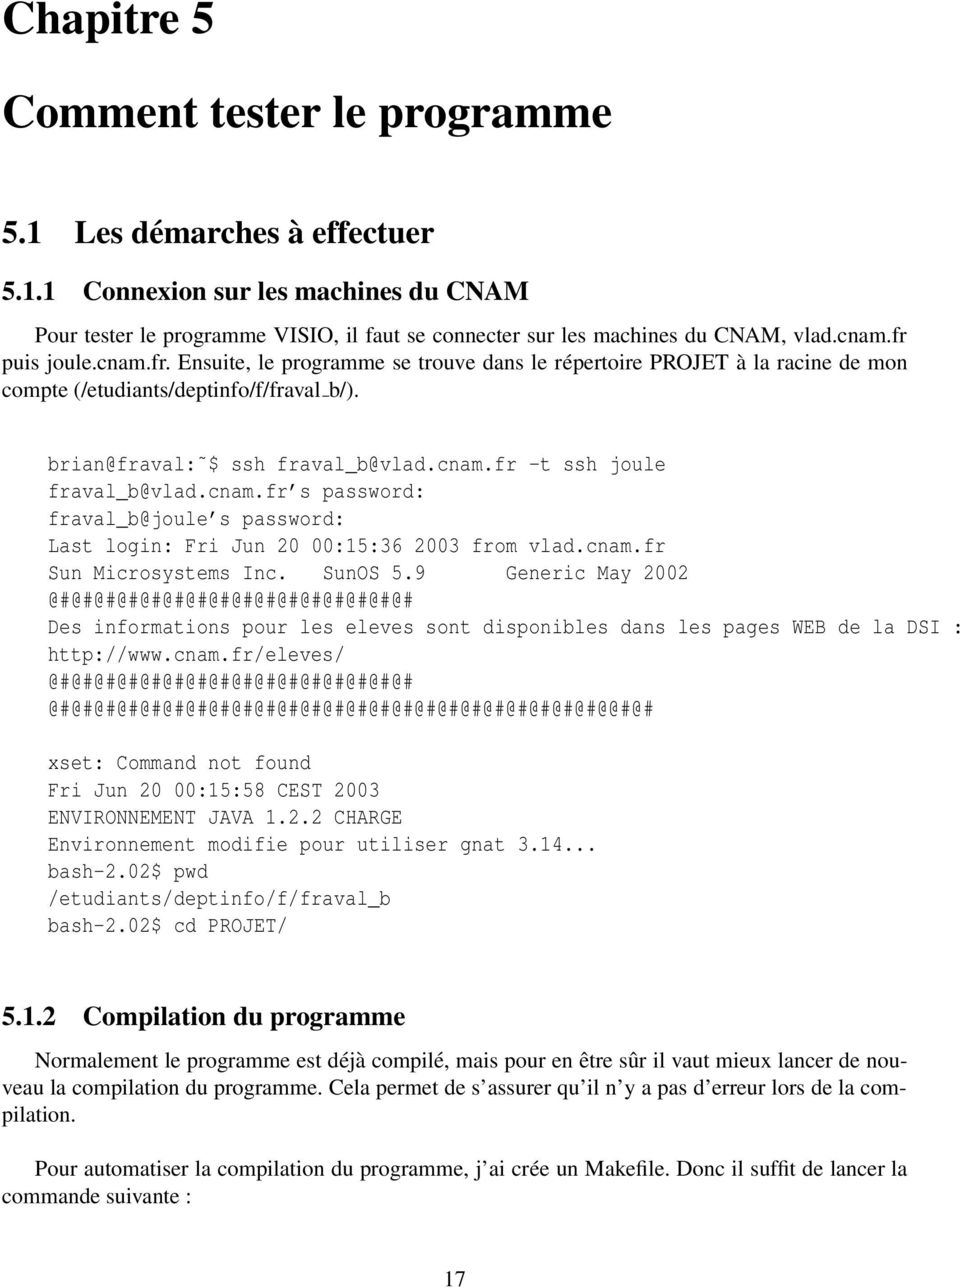 cnam.fr s password: fraval_b@joule s password: Last login: Fri Jun 20 00:15:36 2003 from vlad.cnam.fr Sun Microsystems Inc. SunOS 5.